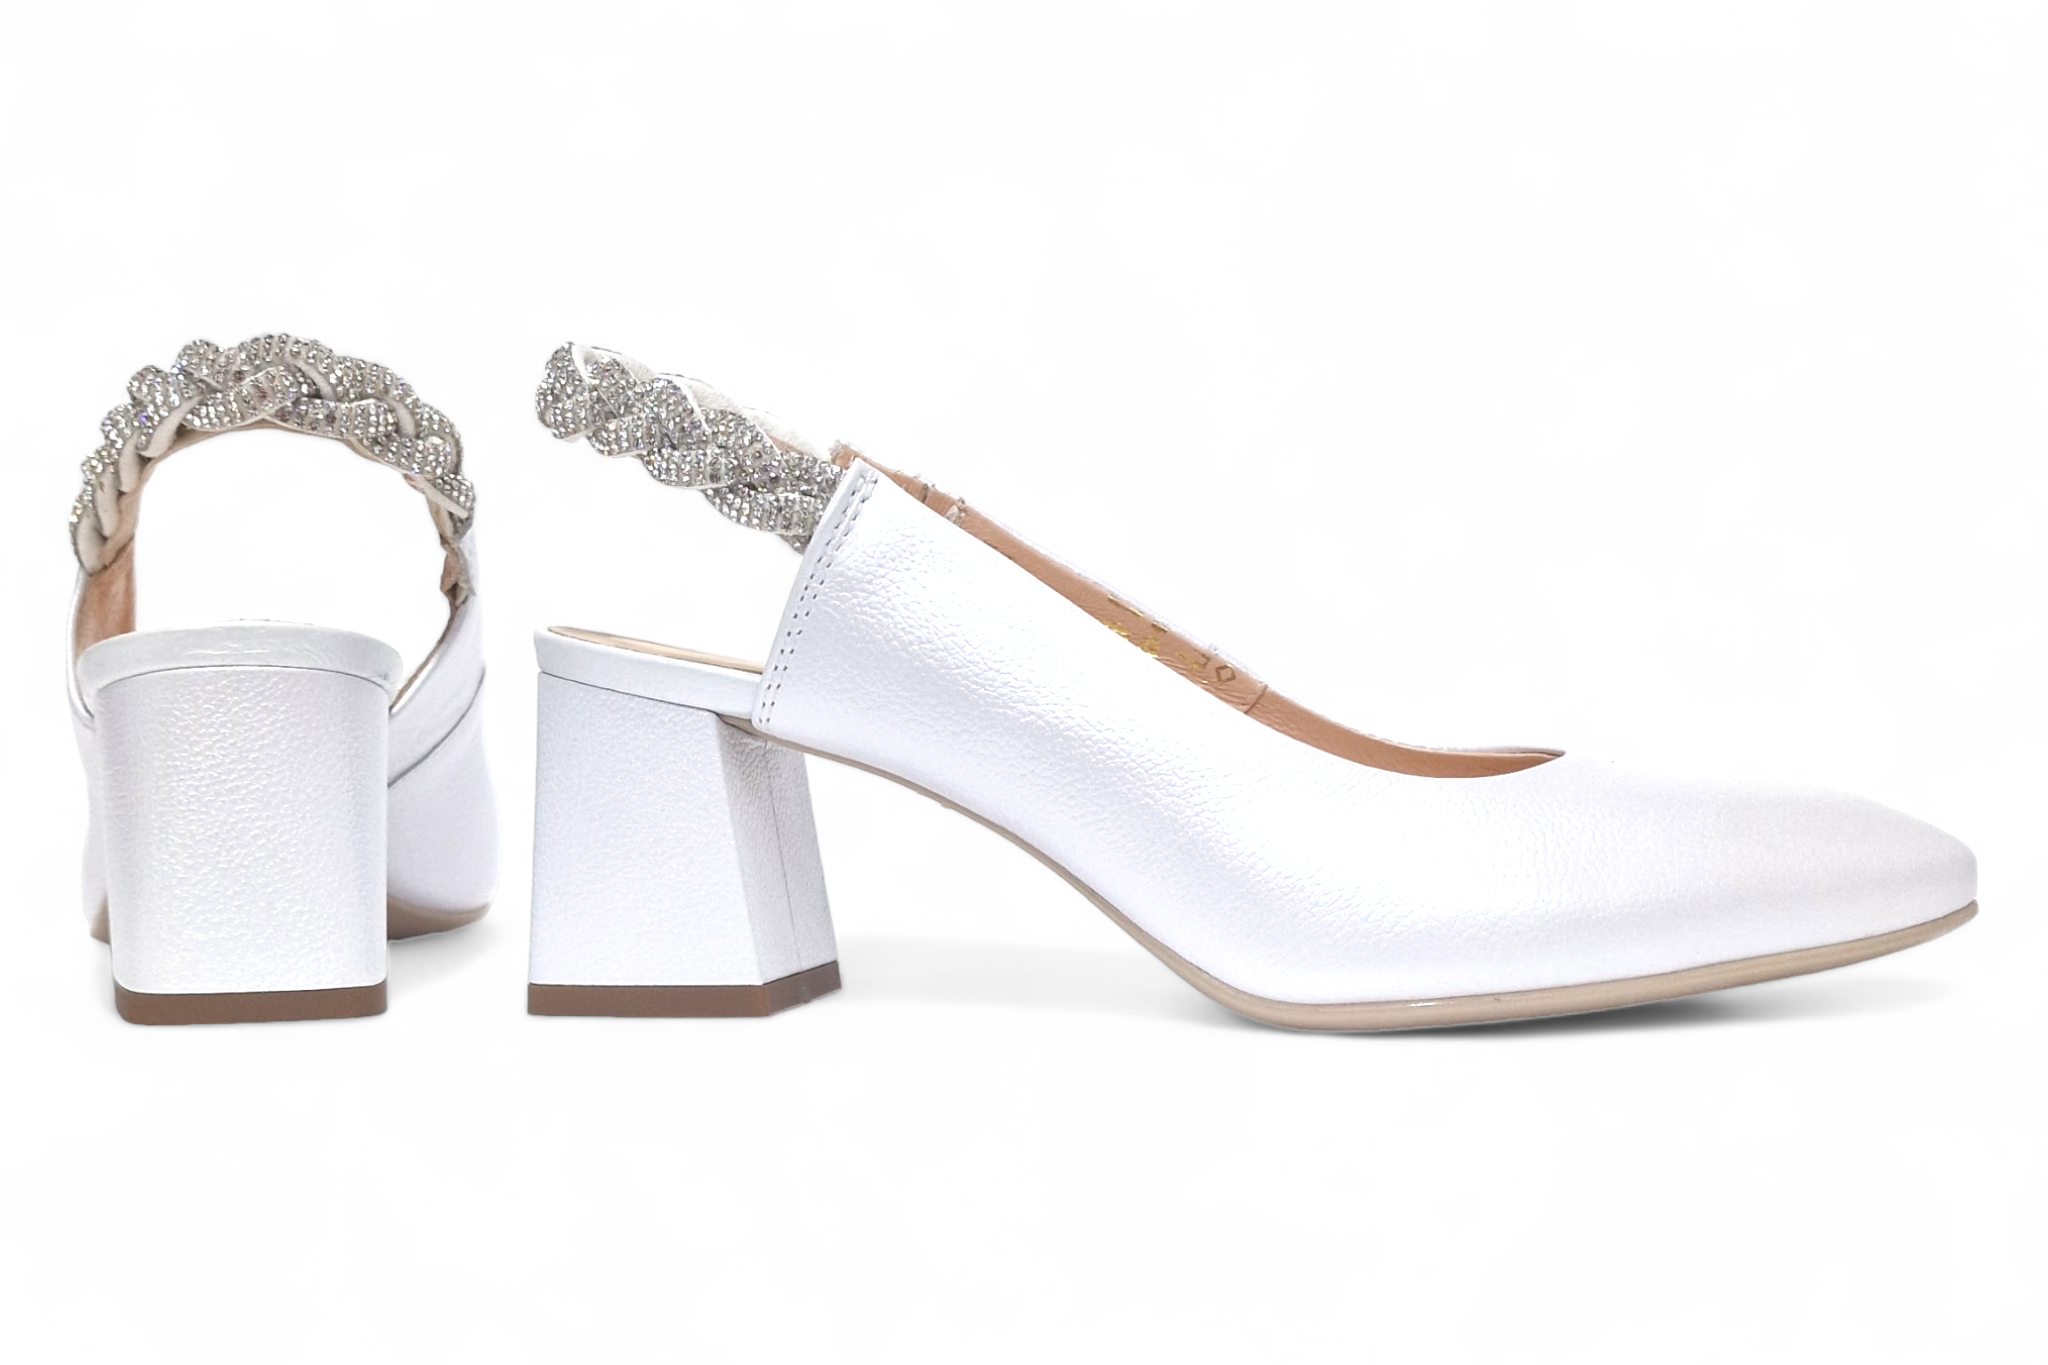 Pantofi dama eleganti piele naturala SALA dec 9977 alb sidef